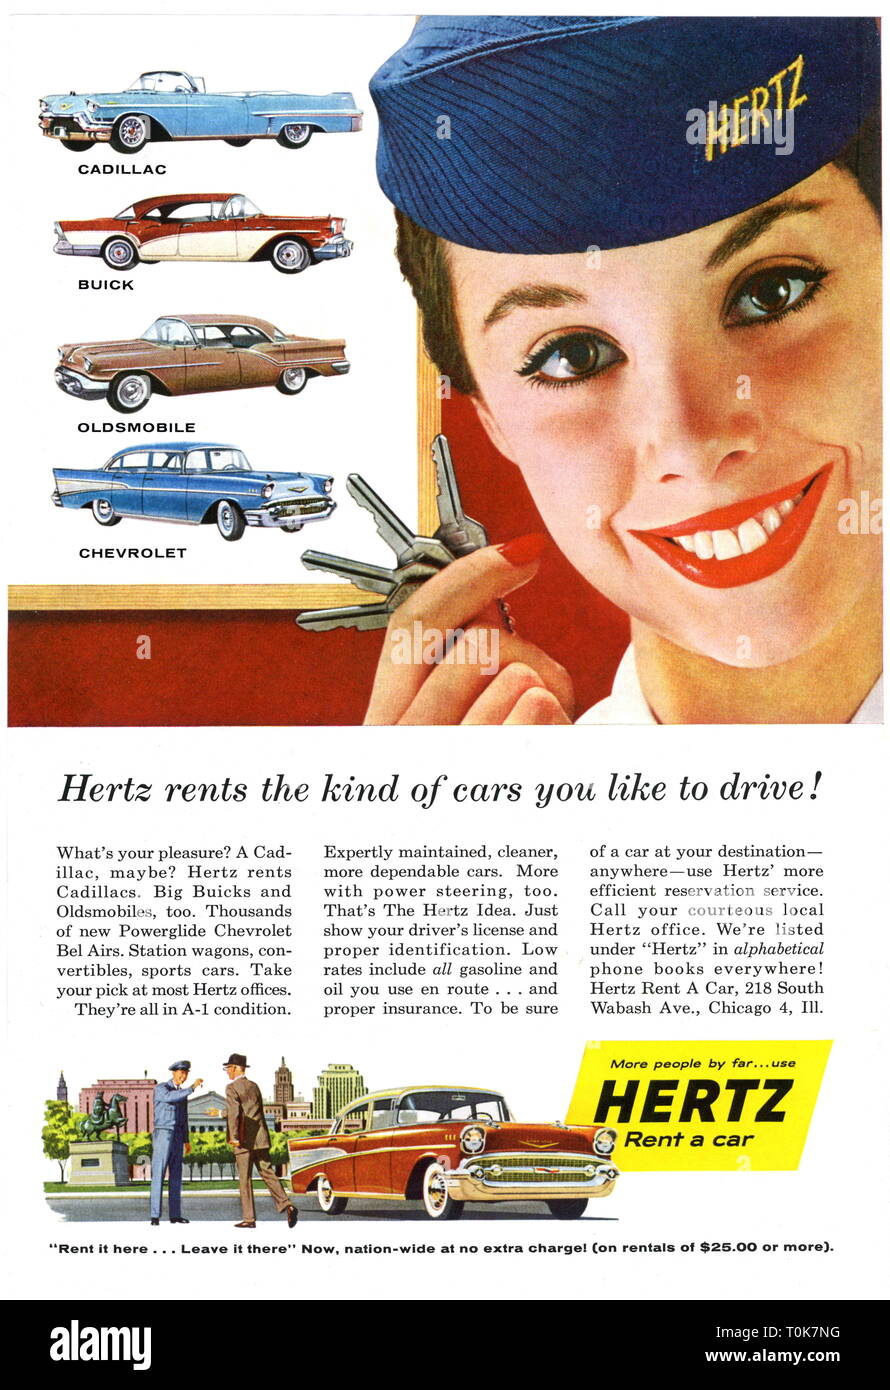 Hertz car usa hi-res stock photography and images - Alamy